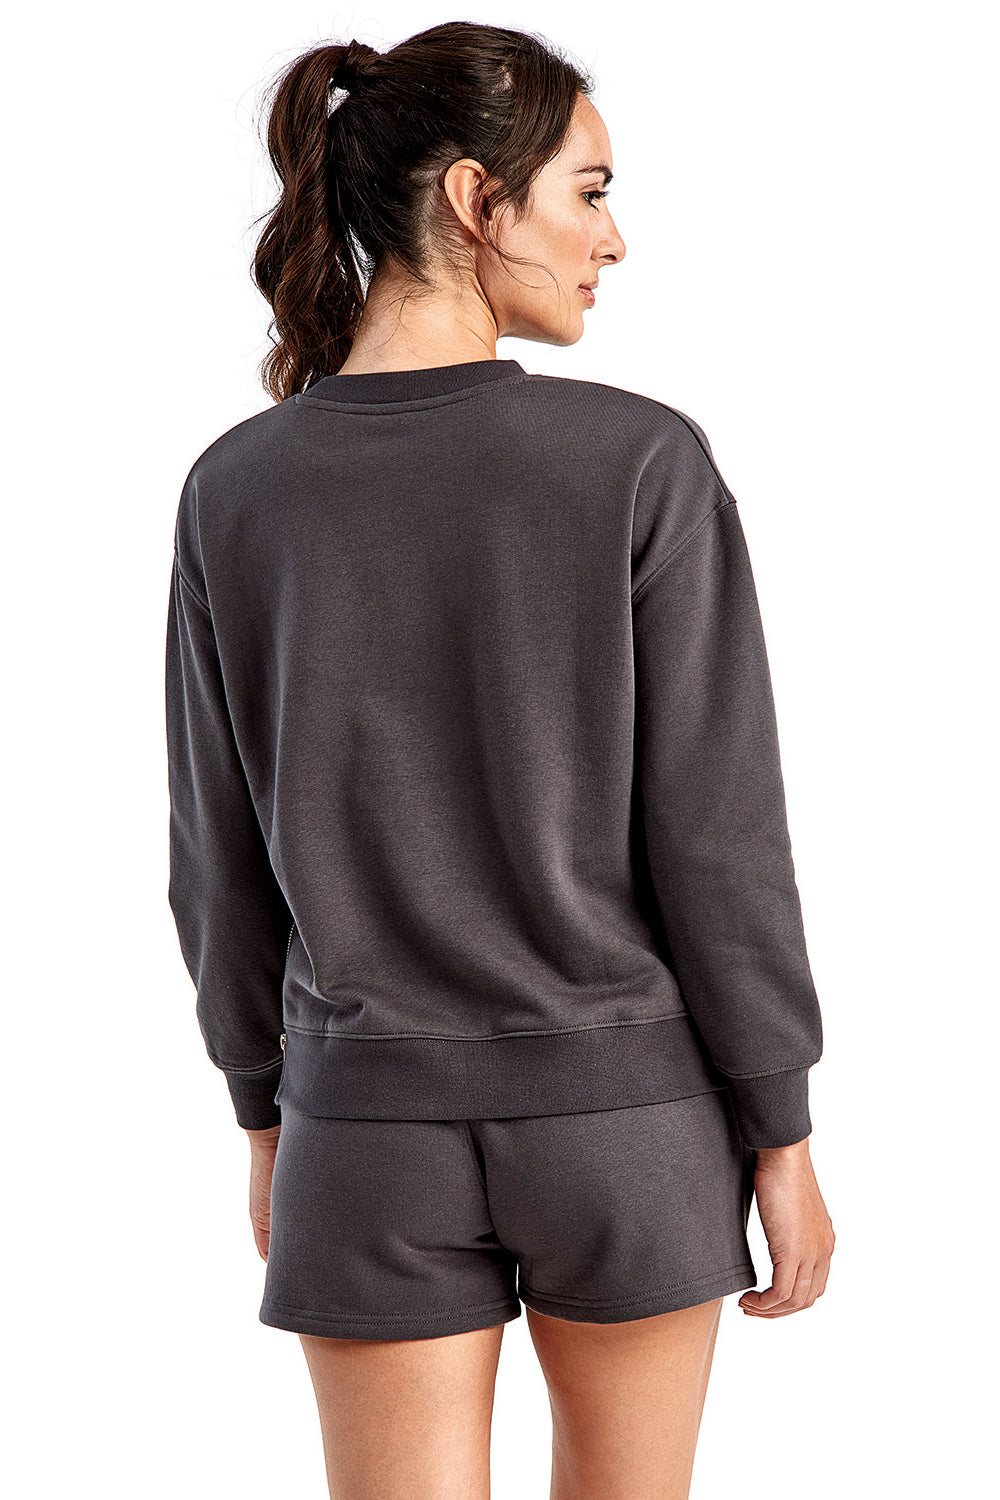 TriDri TD600 Womens Billie Side Zip Crewneck Sweatshirt Charcoal Grey Back